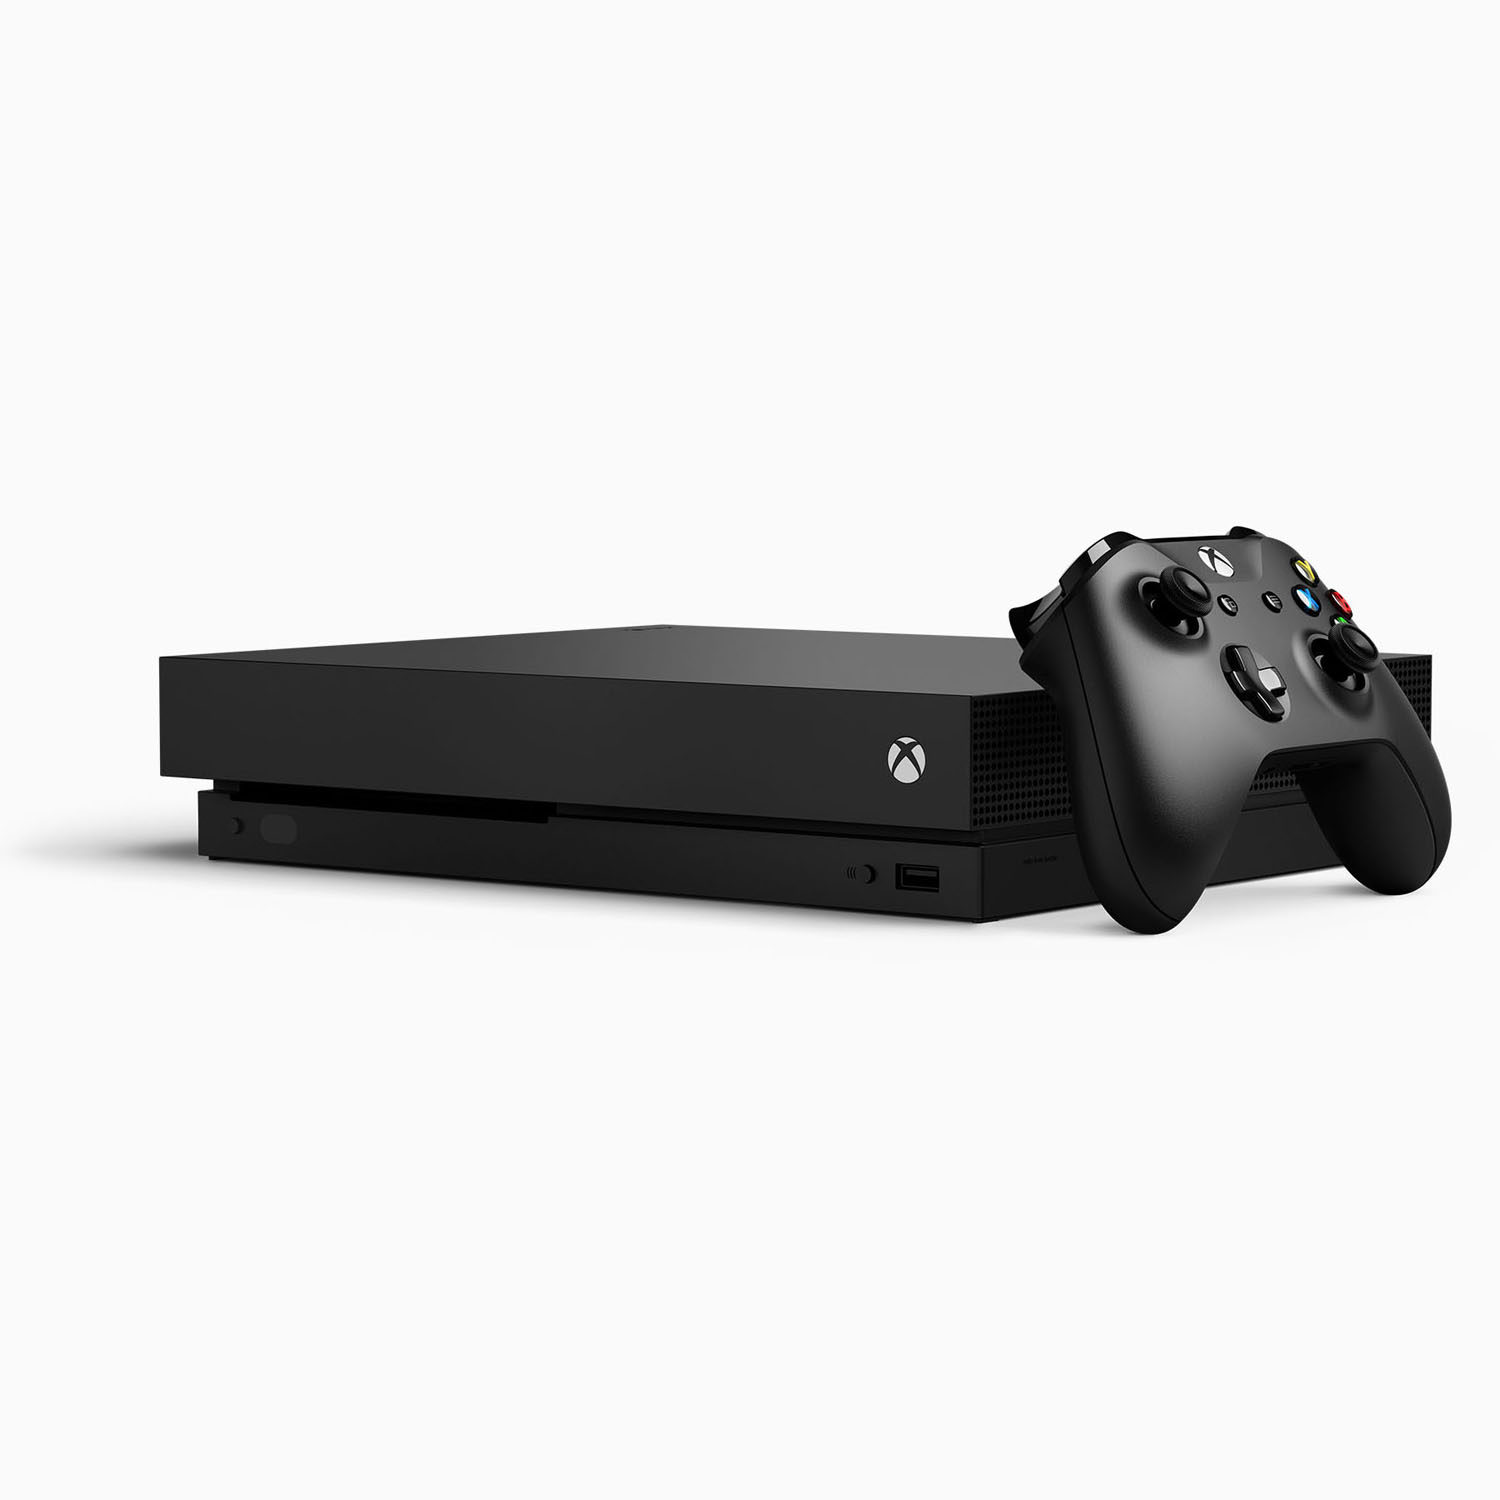 Restored Microsoft Xbox One X 1TB, 4K Ultra HD Gaming Console in Black, FMQ-00042, 889842246971 (Refurbished) - image 3 of 9